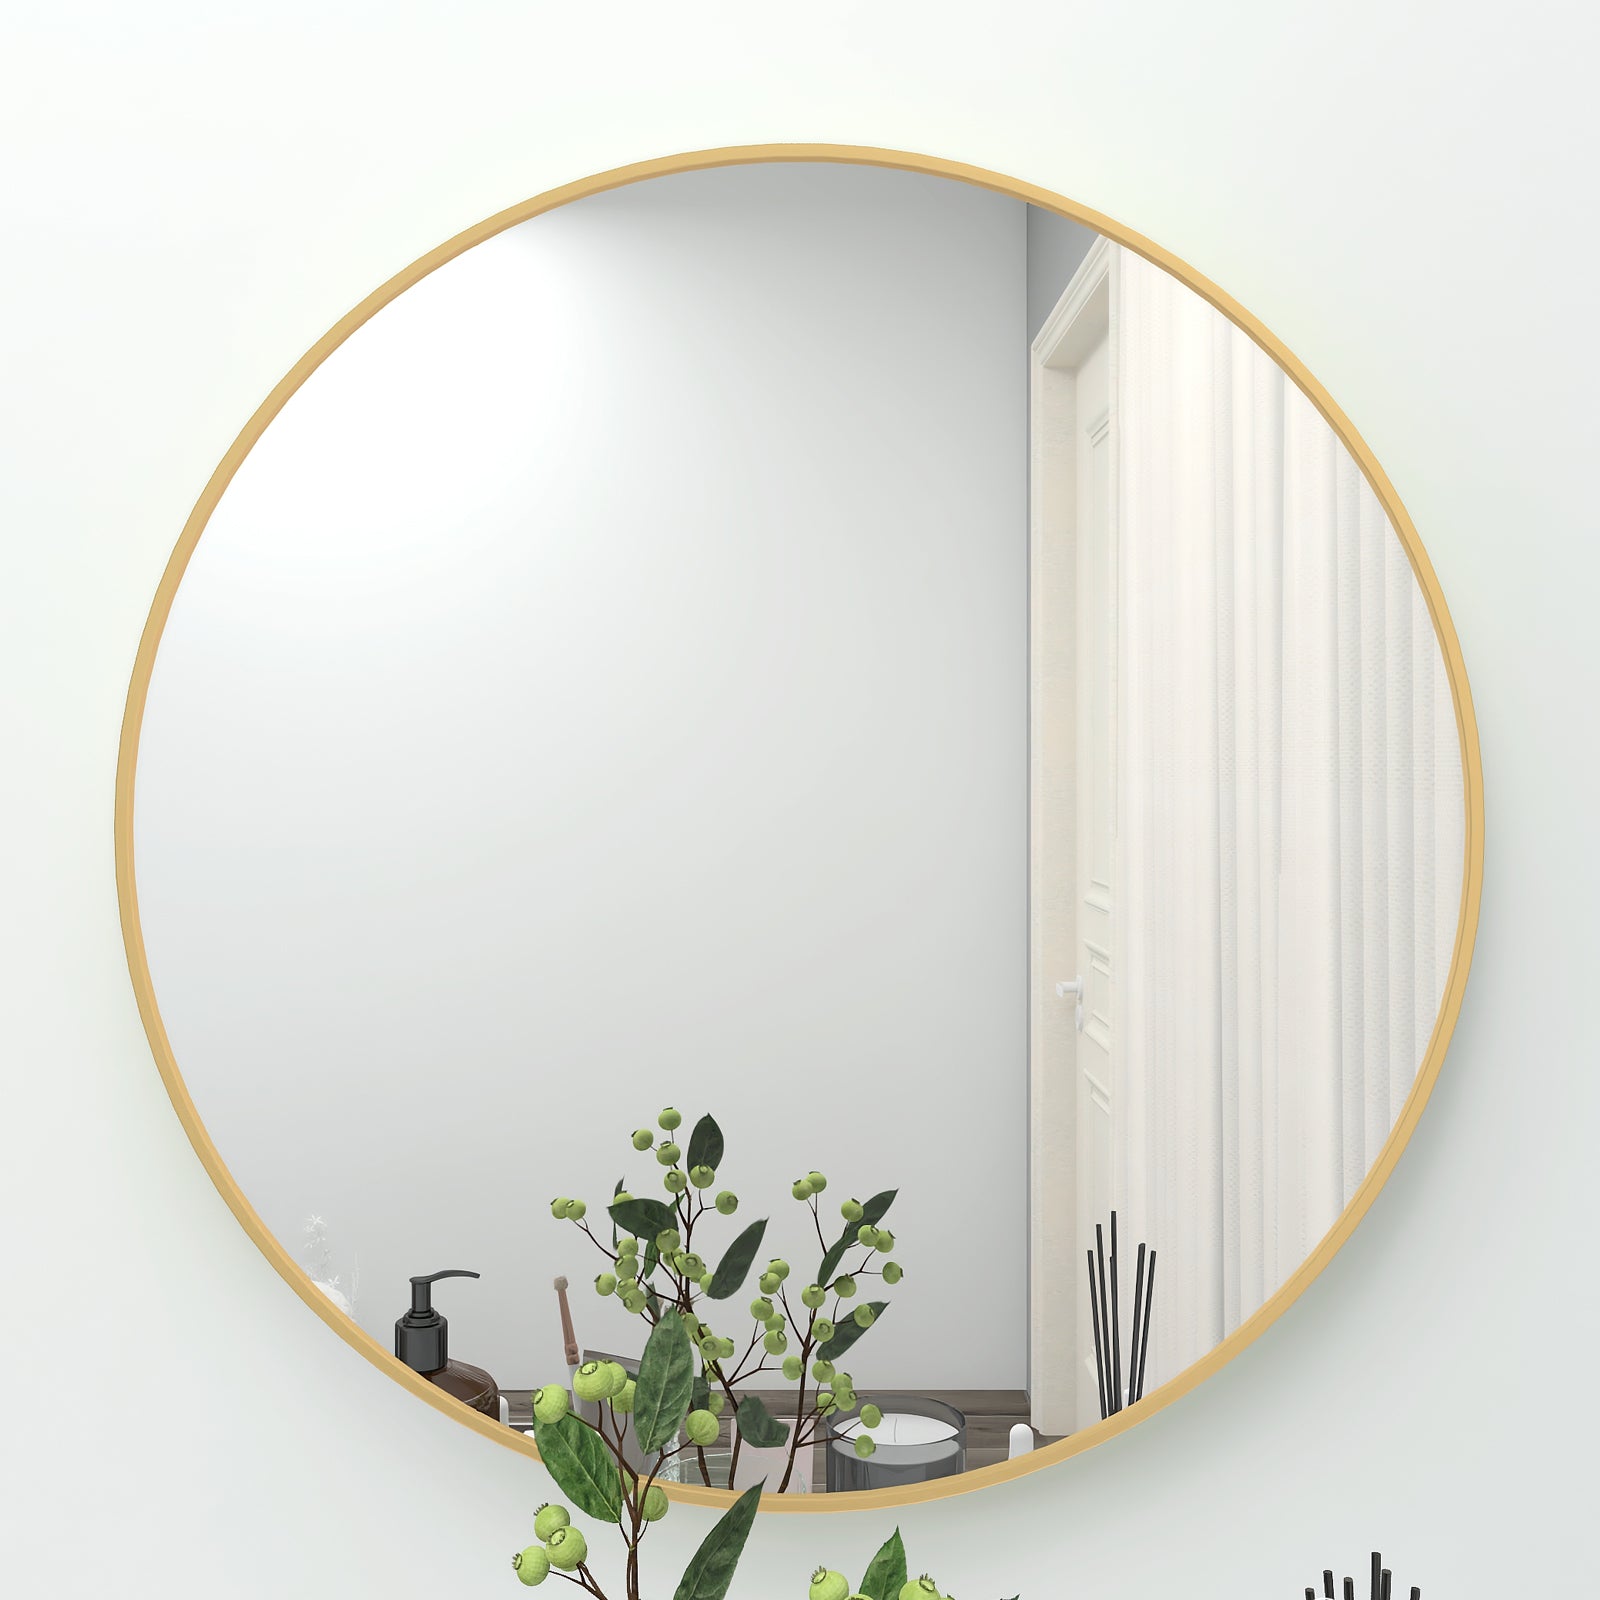 ZNTS 24" Wall Circle Mirror Large Round Gold Farmhouse Circular Mirror for Wall Decor Big Bathroom Make W66231062